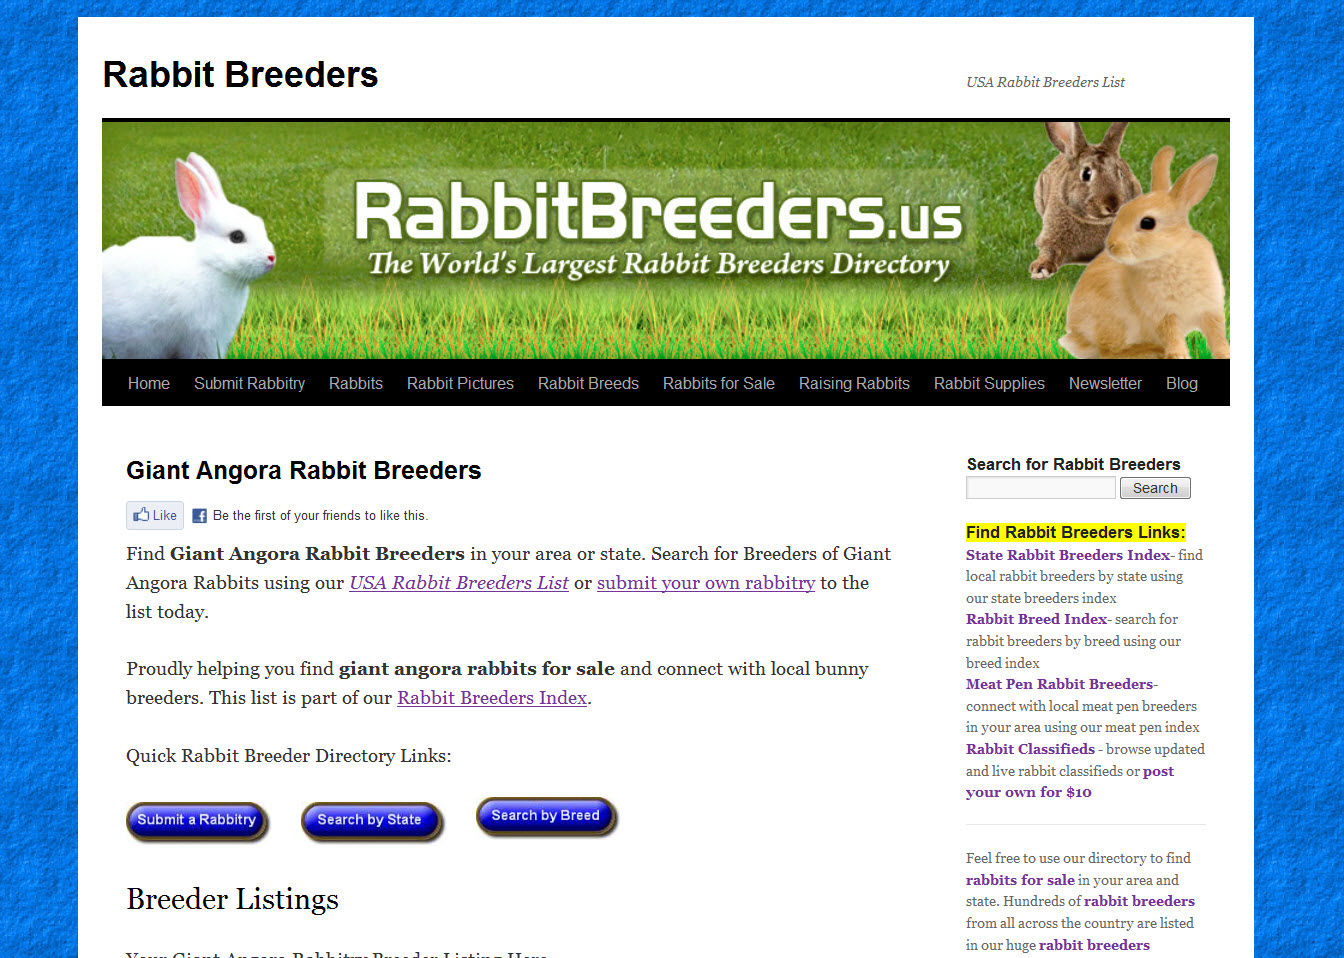 Giant Angora Rabbits for Sale